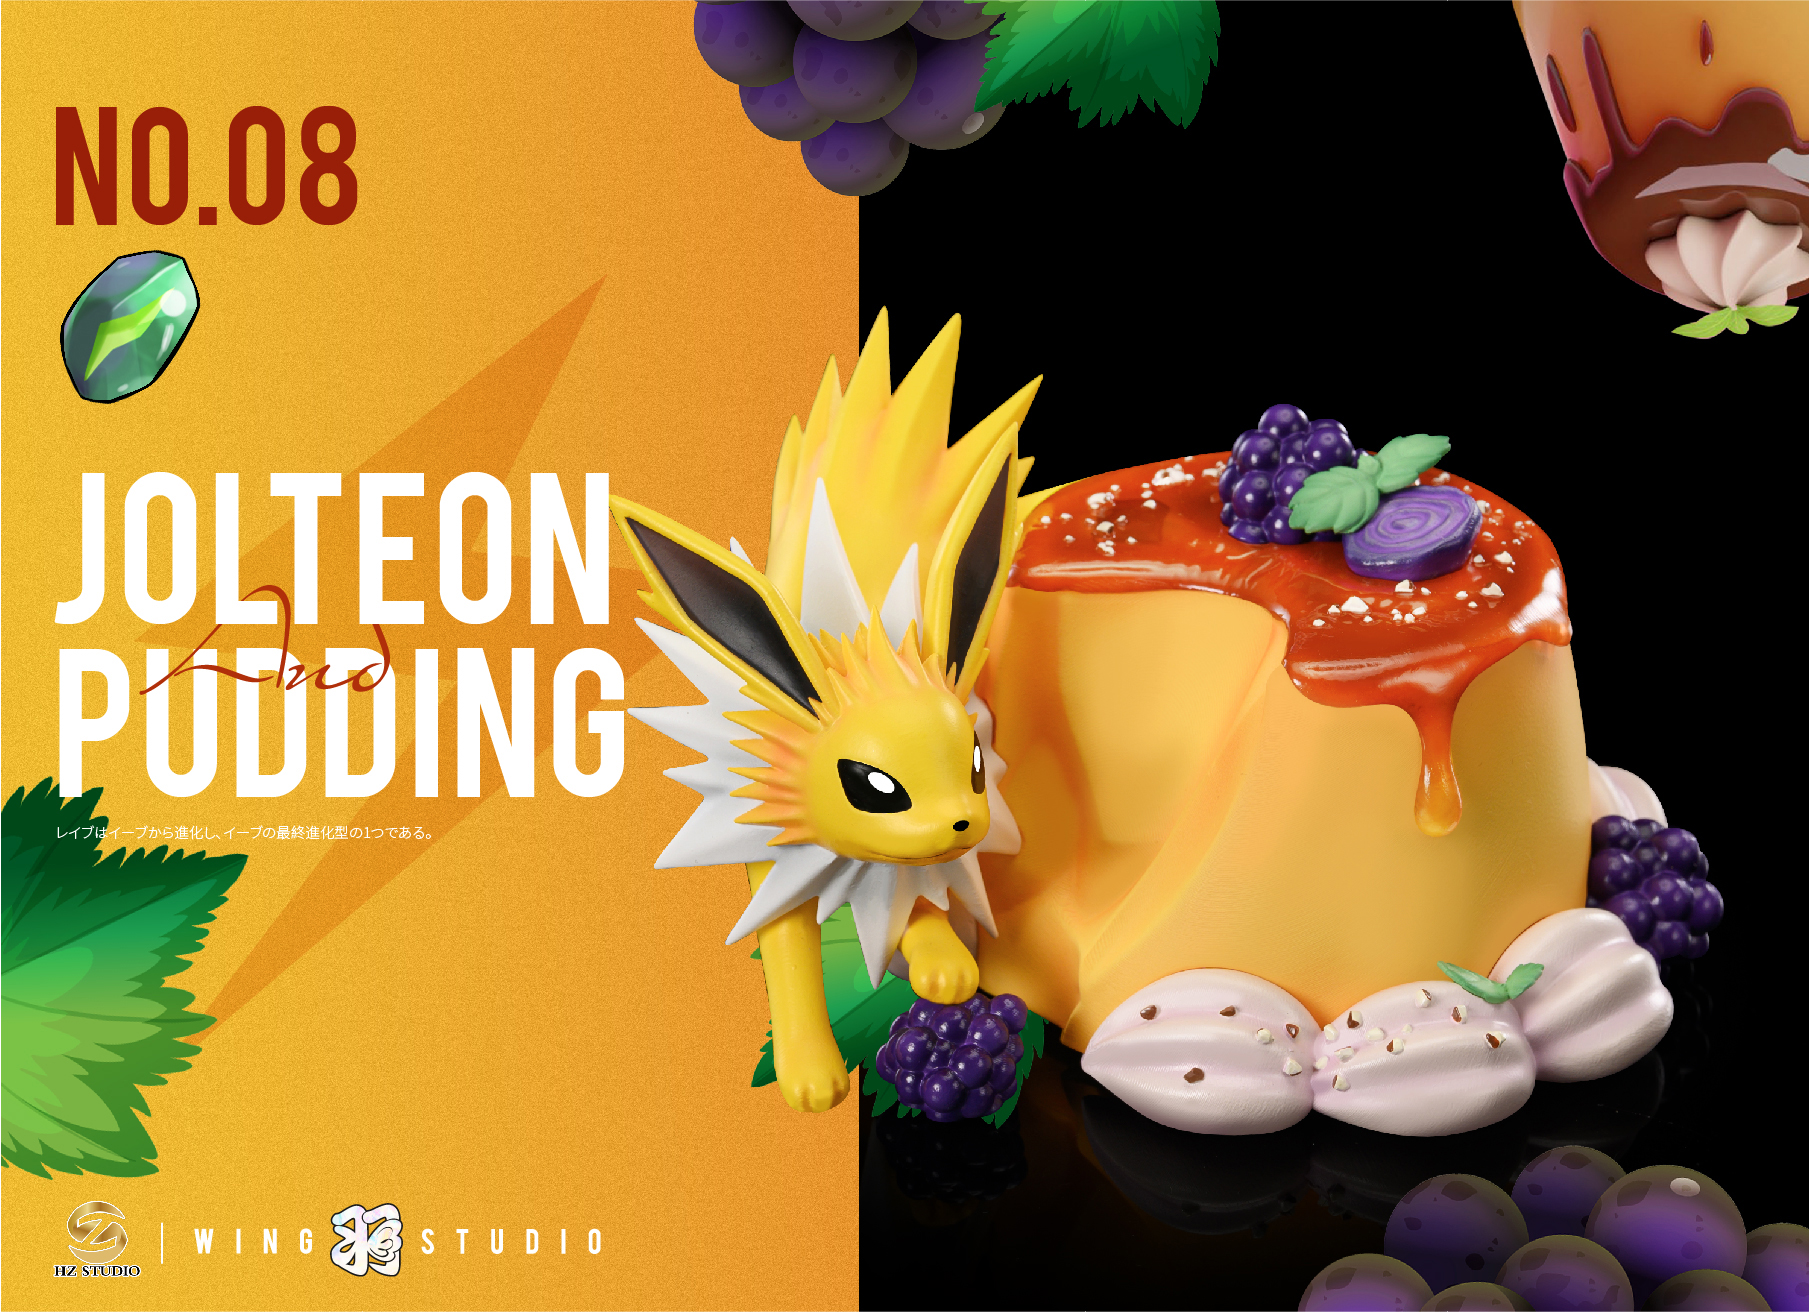 Pokémon Pikachu Evolution Group Resin Statue - Unova Studio [Pre-Order –  YesGK